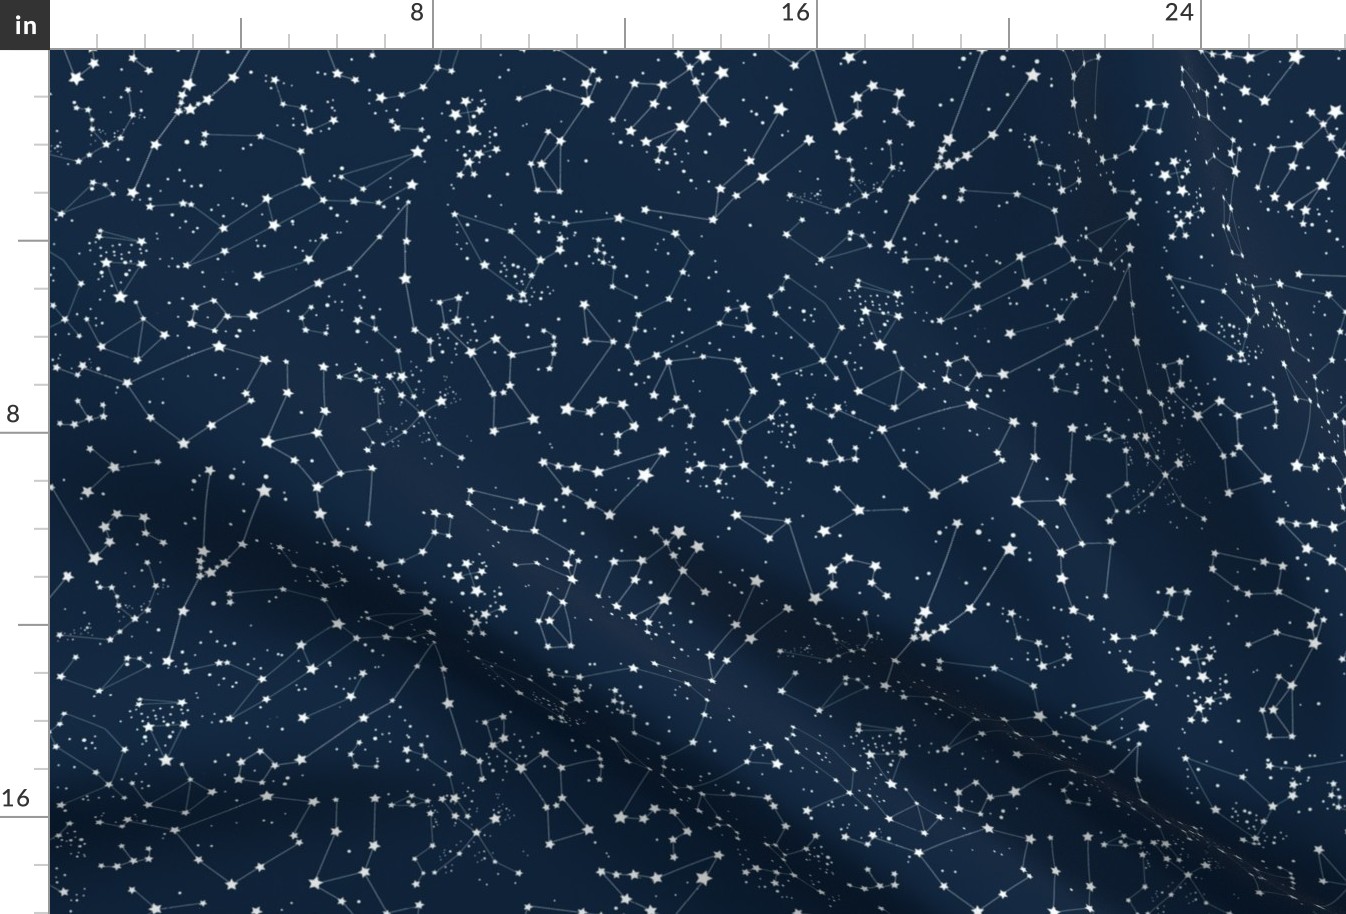 Constellations - white stars - navy blue background